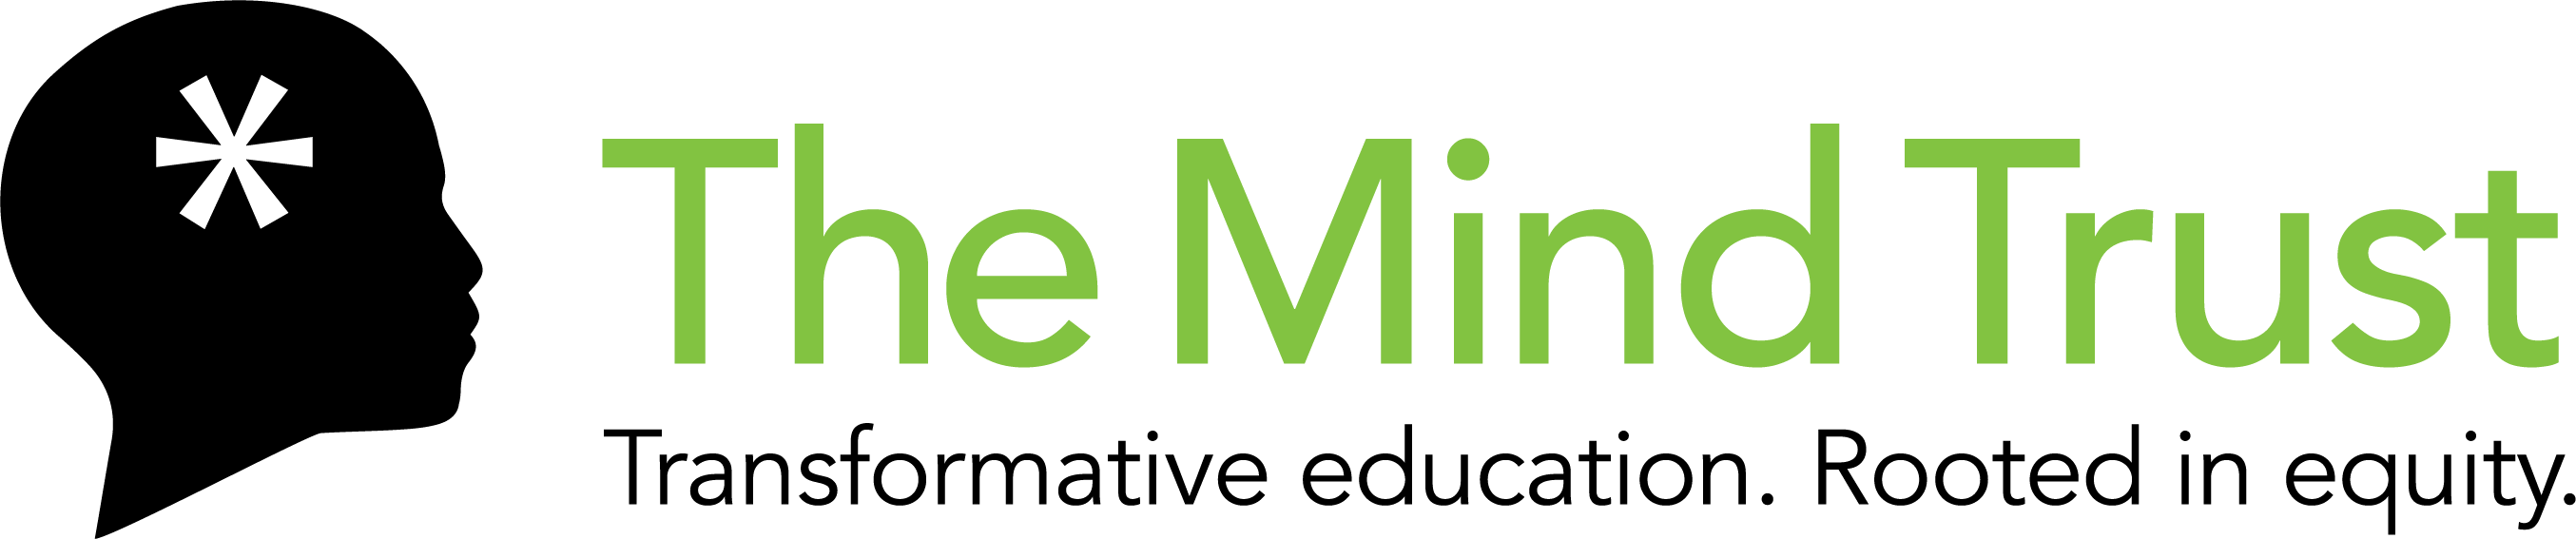 The Mind Trust sponsor logo